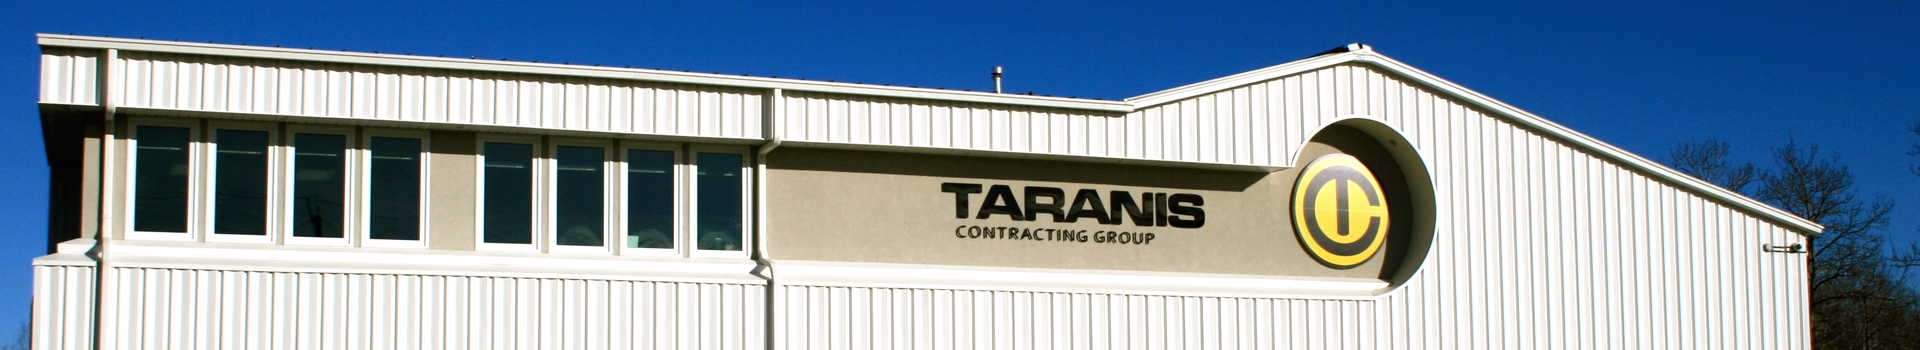 Taranis main office image